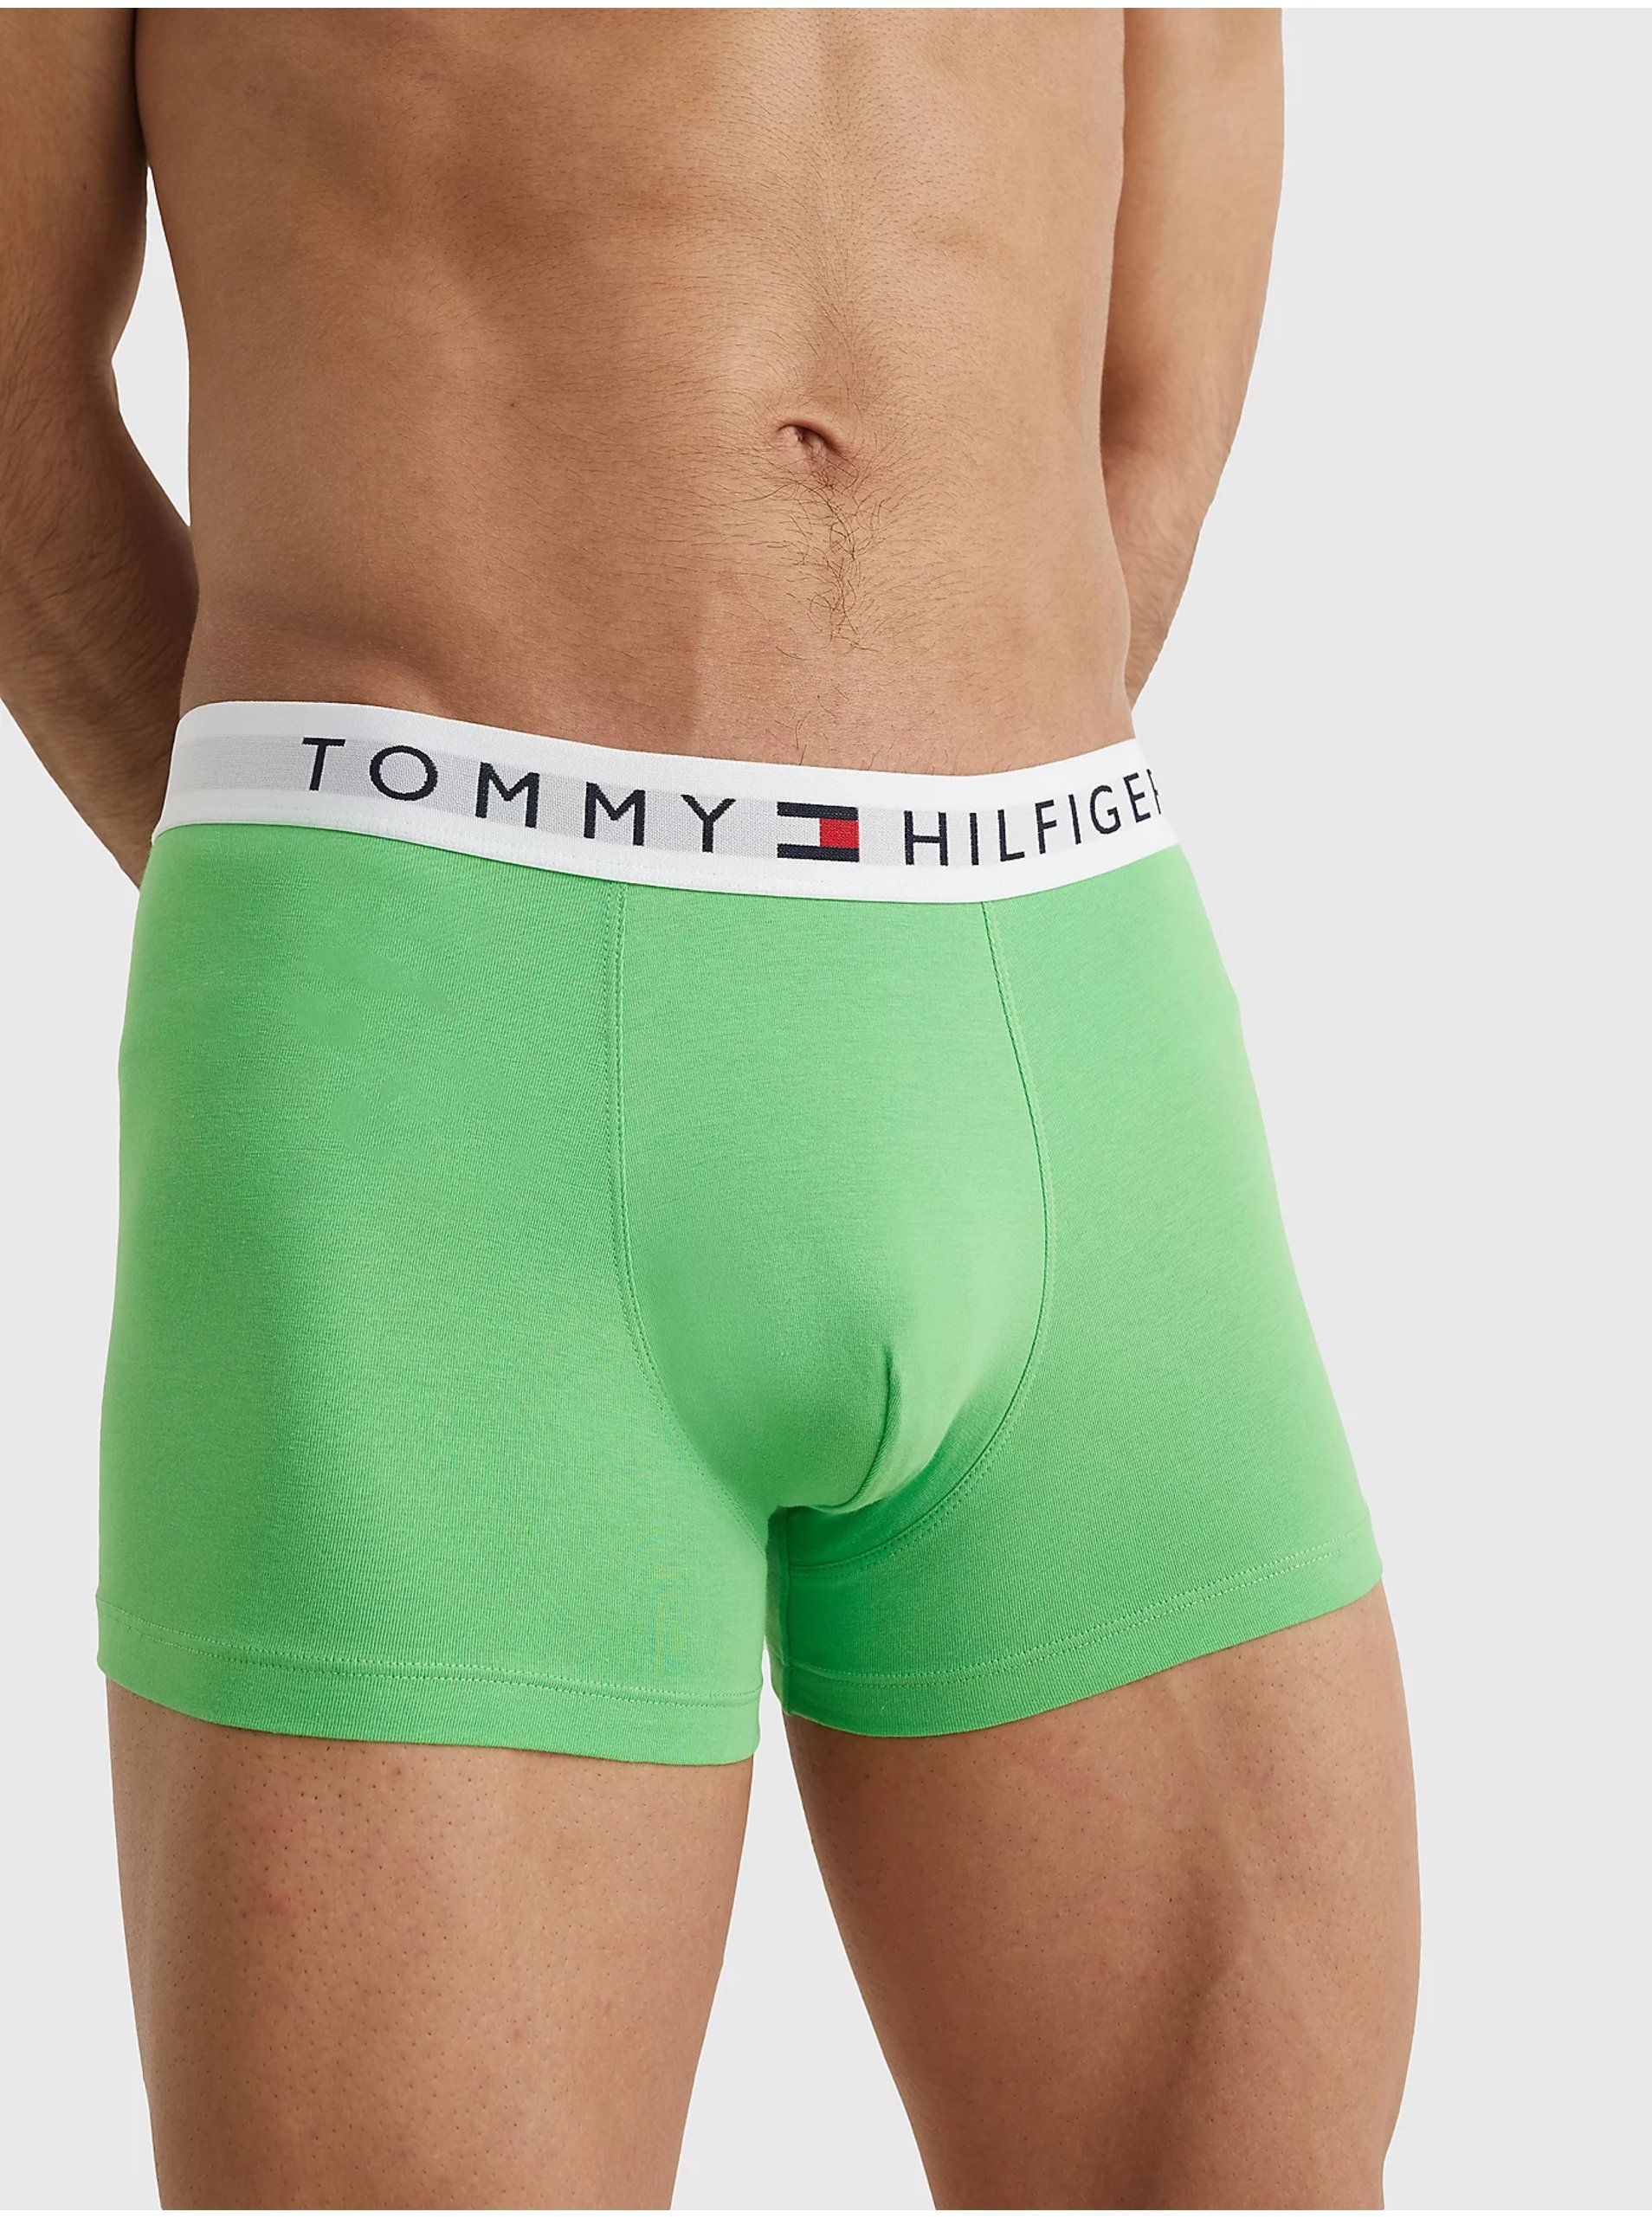 Lacno Svetlozelené pánske boxerky Tommy Hilfiger